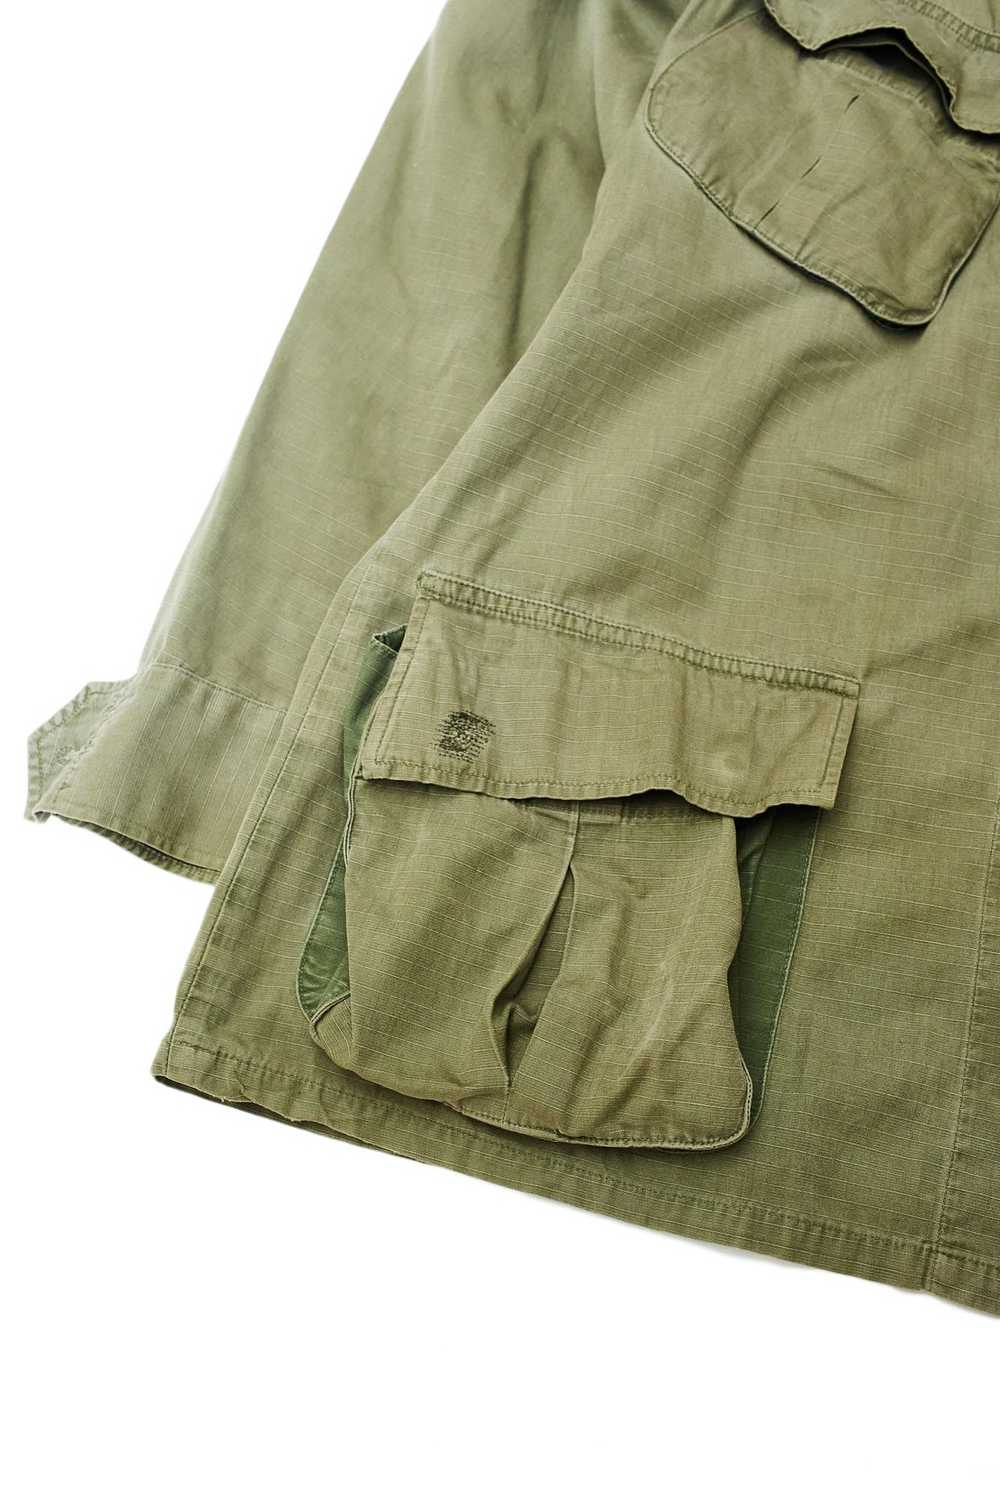 Military 70's Jungle Jacket - image 2